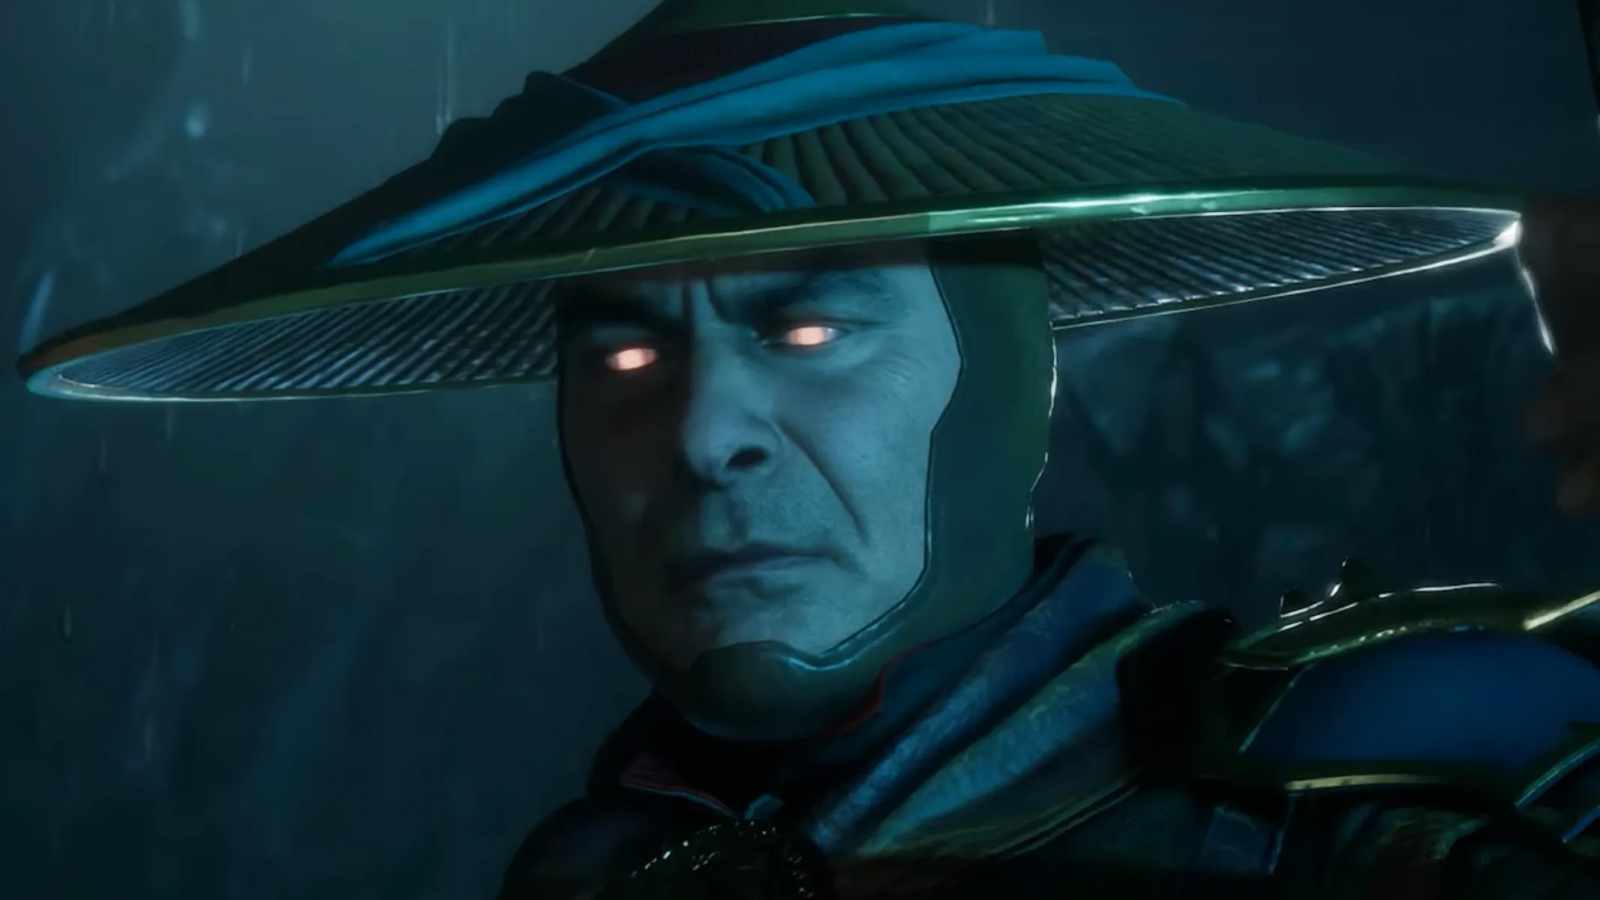 Mortal Kombat 1 leaks reveal Invasions, a new single-player mode